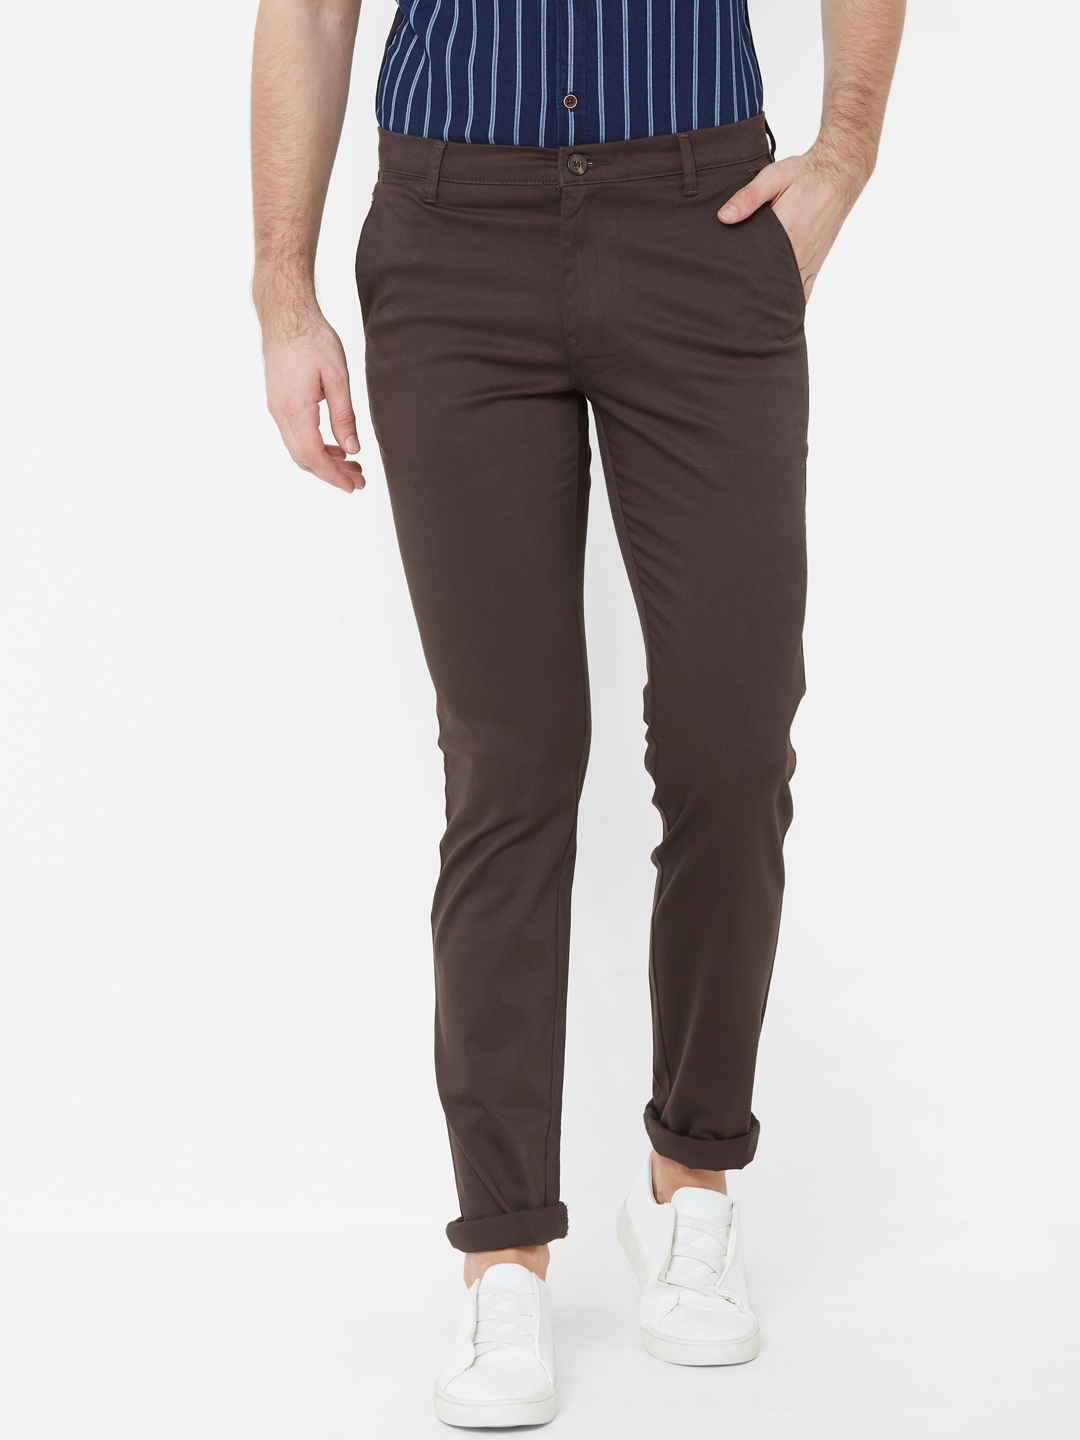 Livewire | Livewire Men's Cotton Lycra Brown Slim Fit Solid Trouser